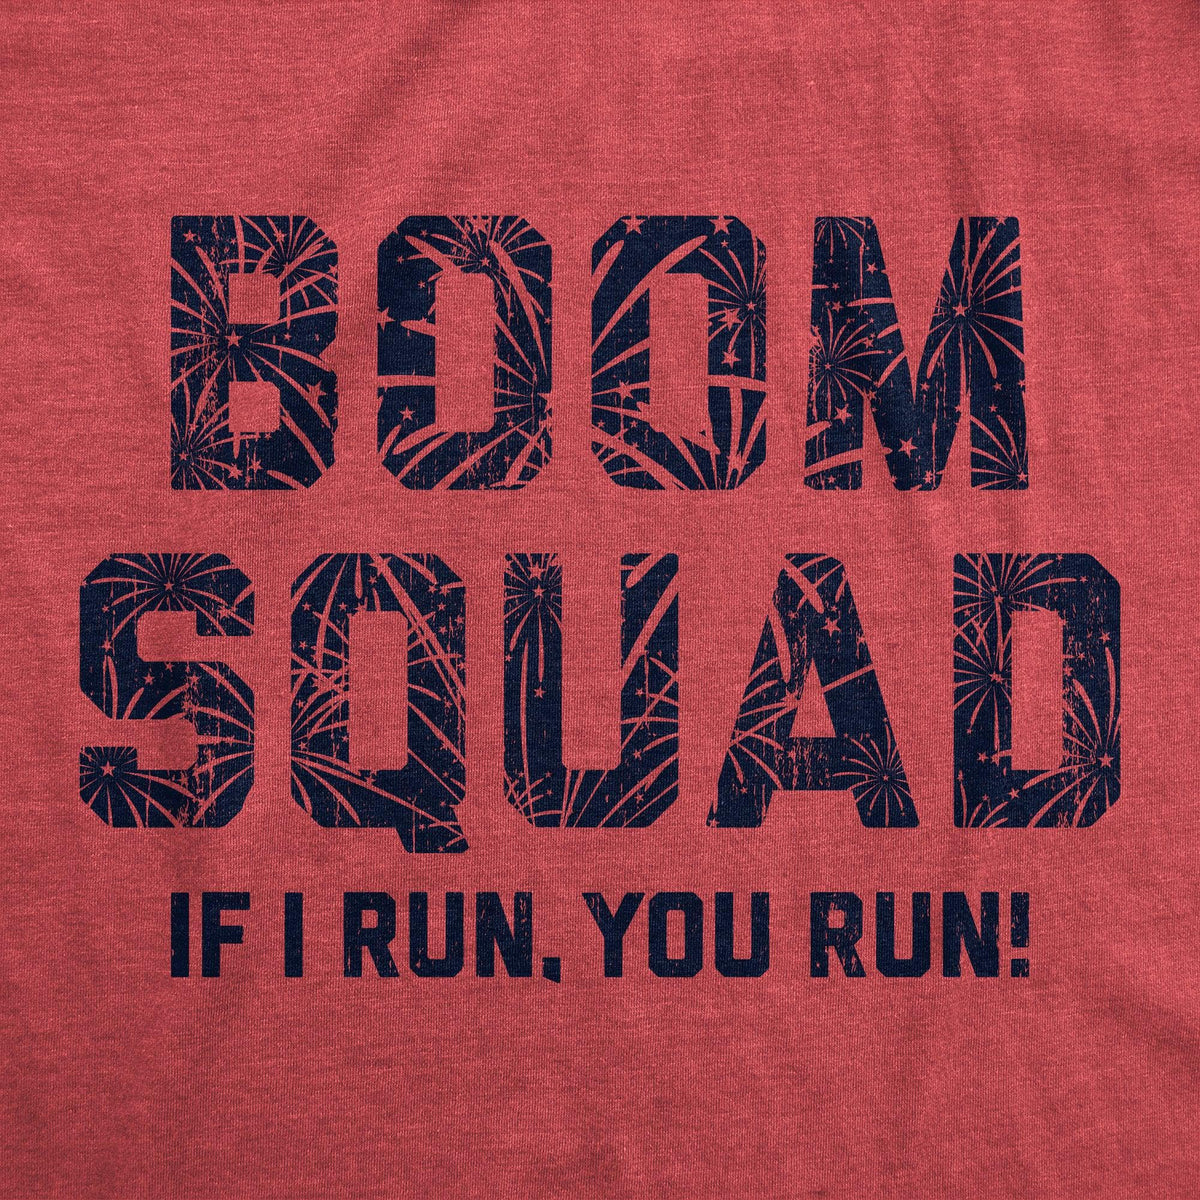 Boom Squad Women&#39;s Tshirt  -  Crazy Dog T-Shirts